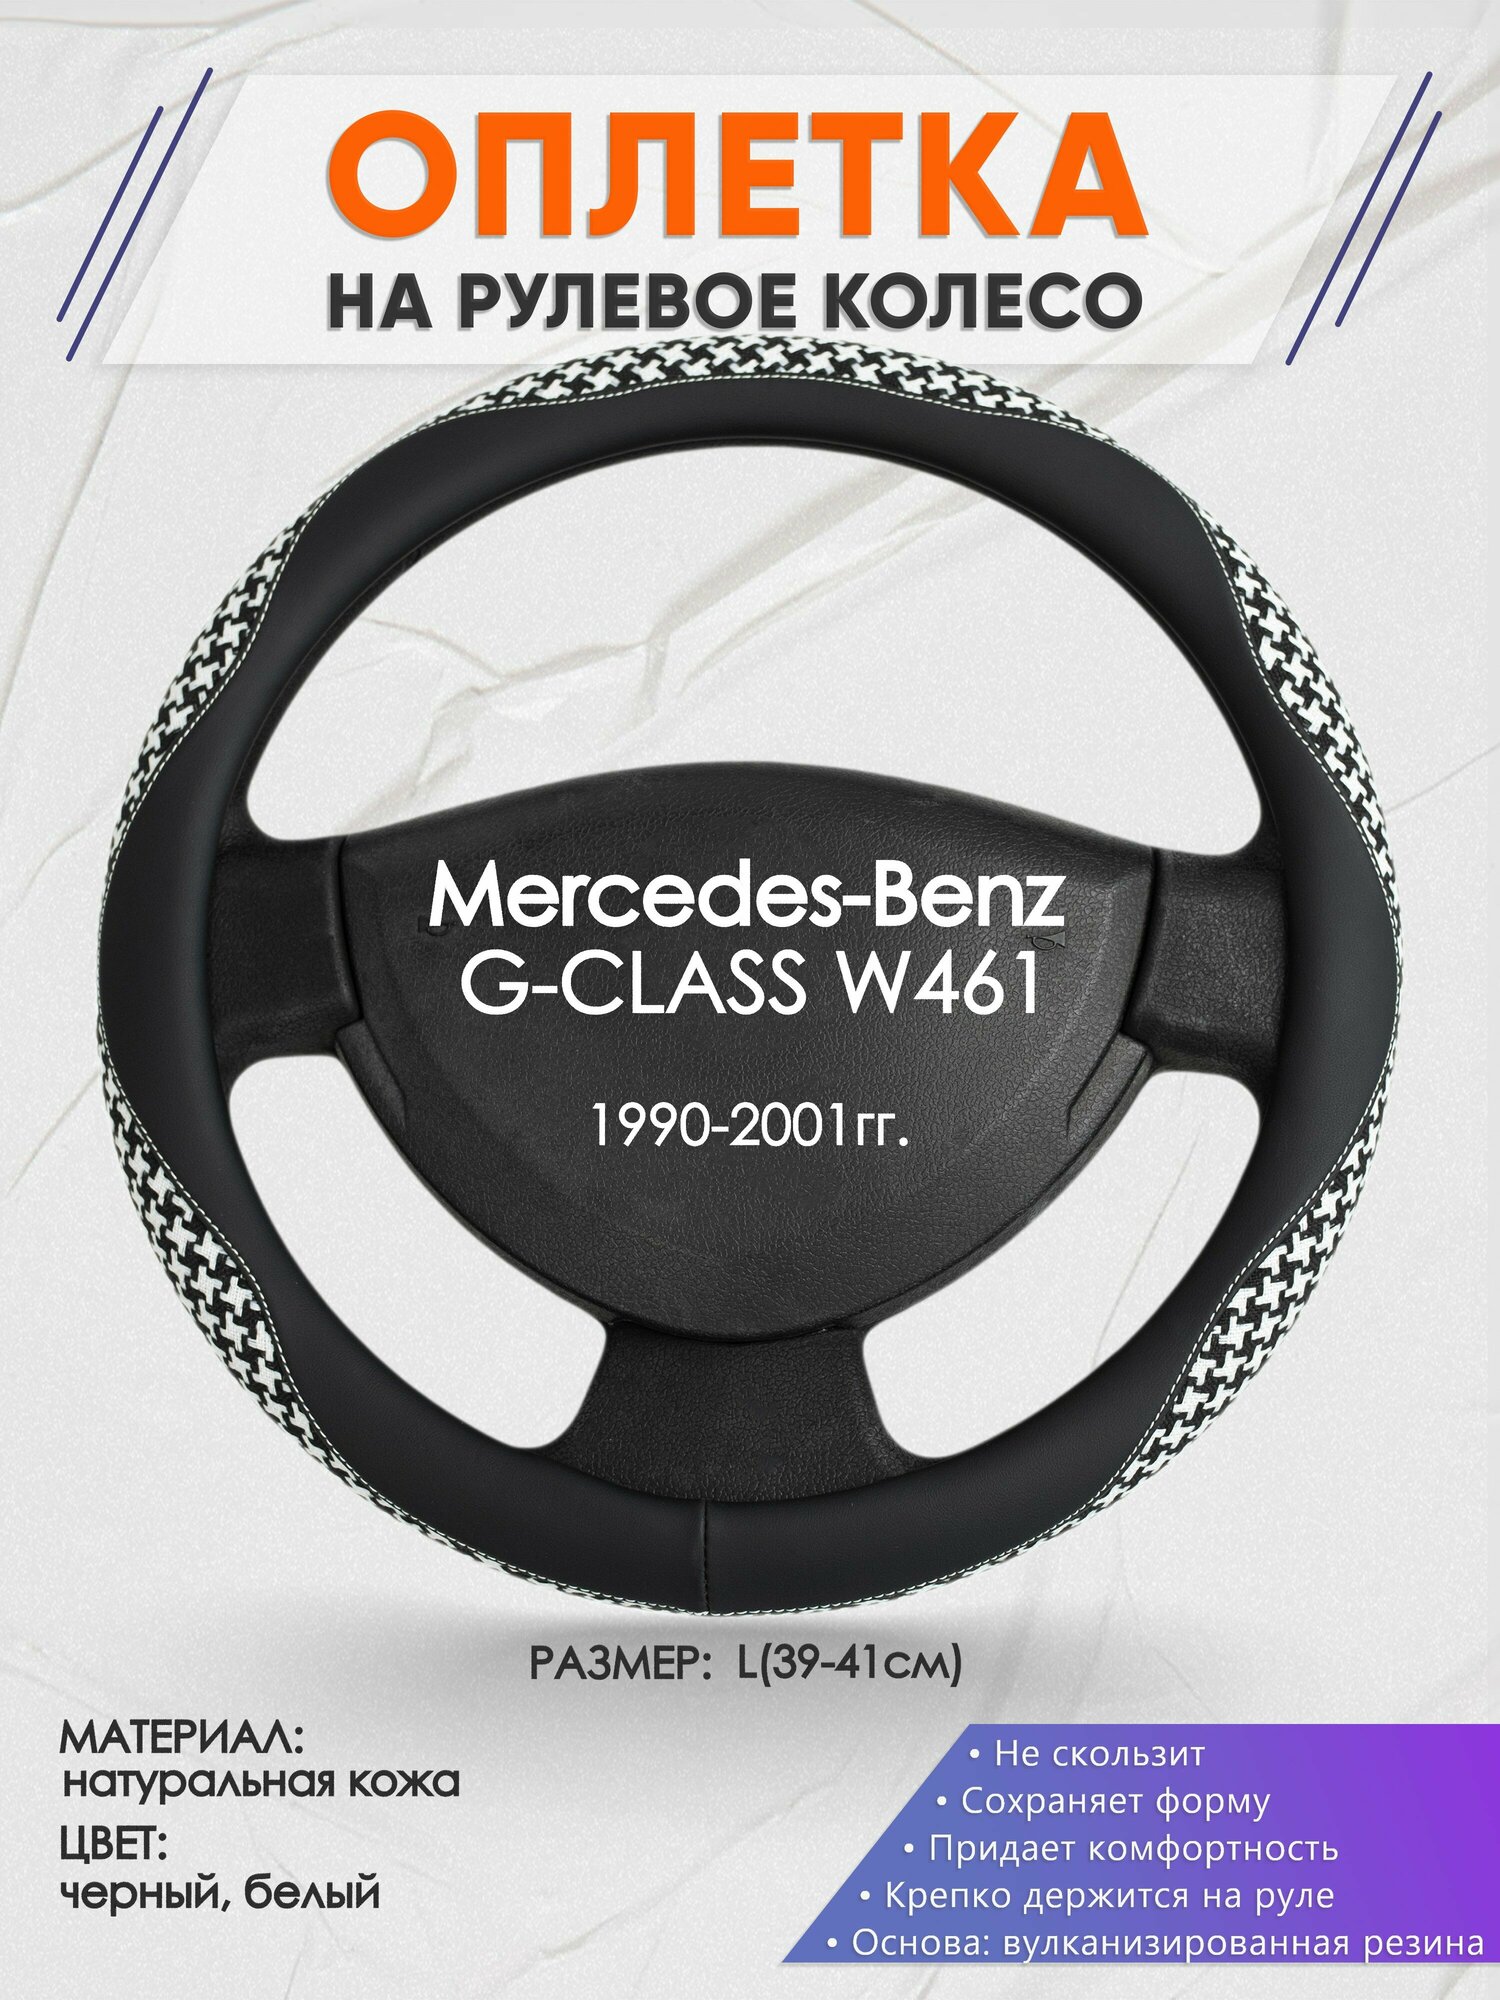 Оплетка на руль для Mercedes-Benz G-CLASS W461(Мерседес Бенц Г Класс) 1990-2001, L(39-41см), Натуральная кожа 21